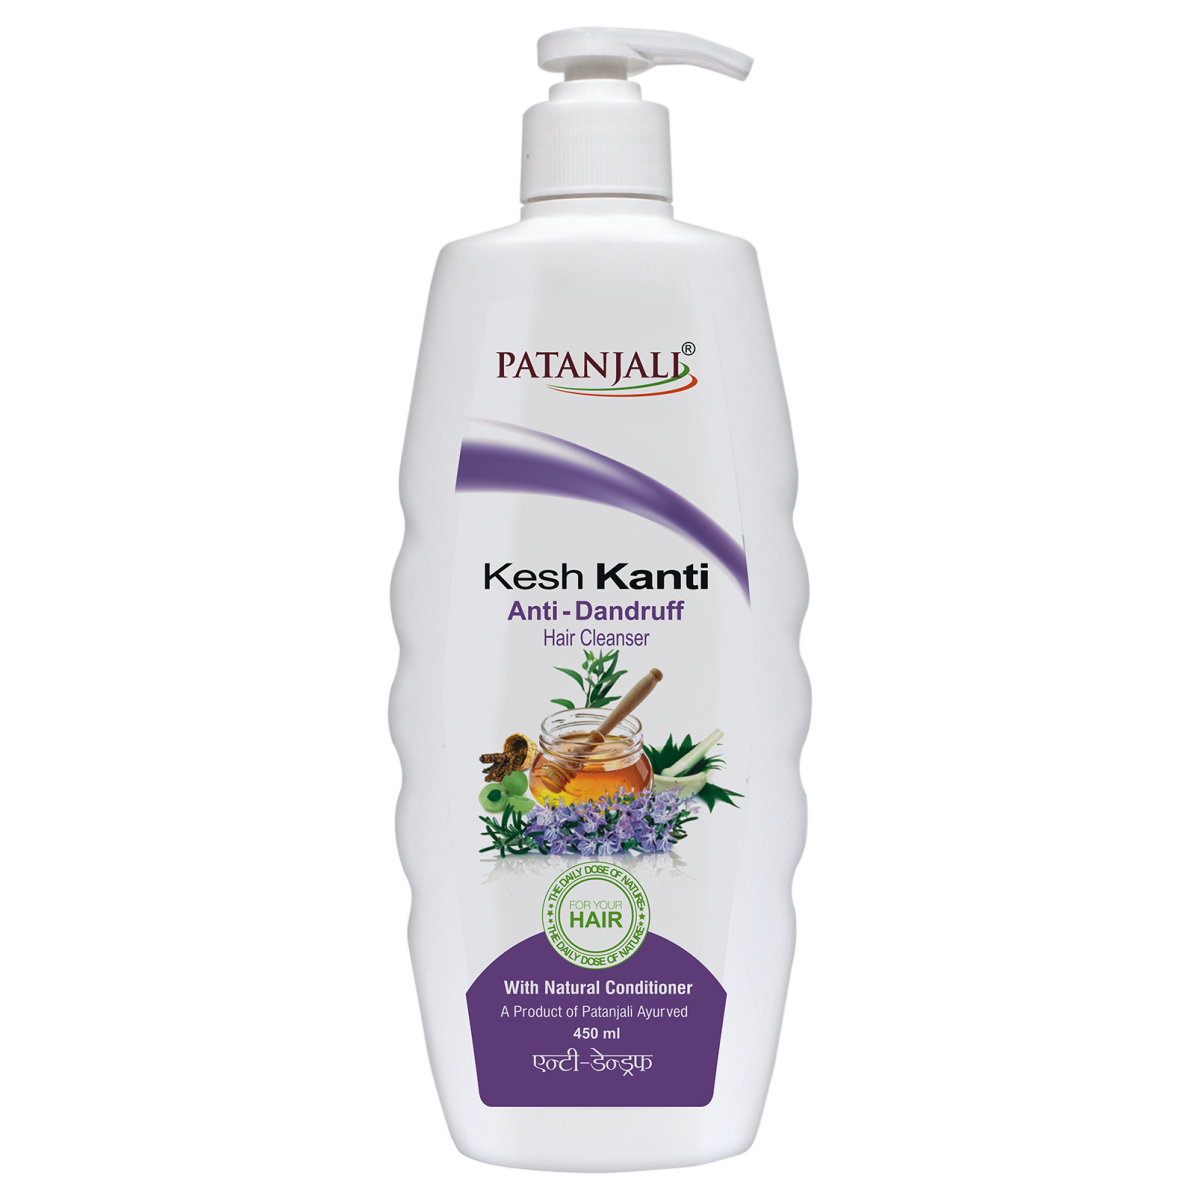 Patanjali Kesh Kanti Milk Protein Shampoo Review